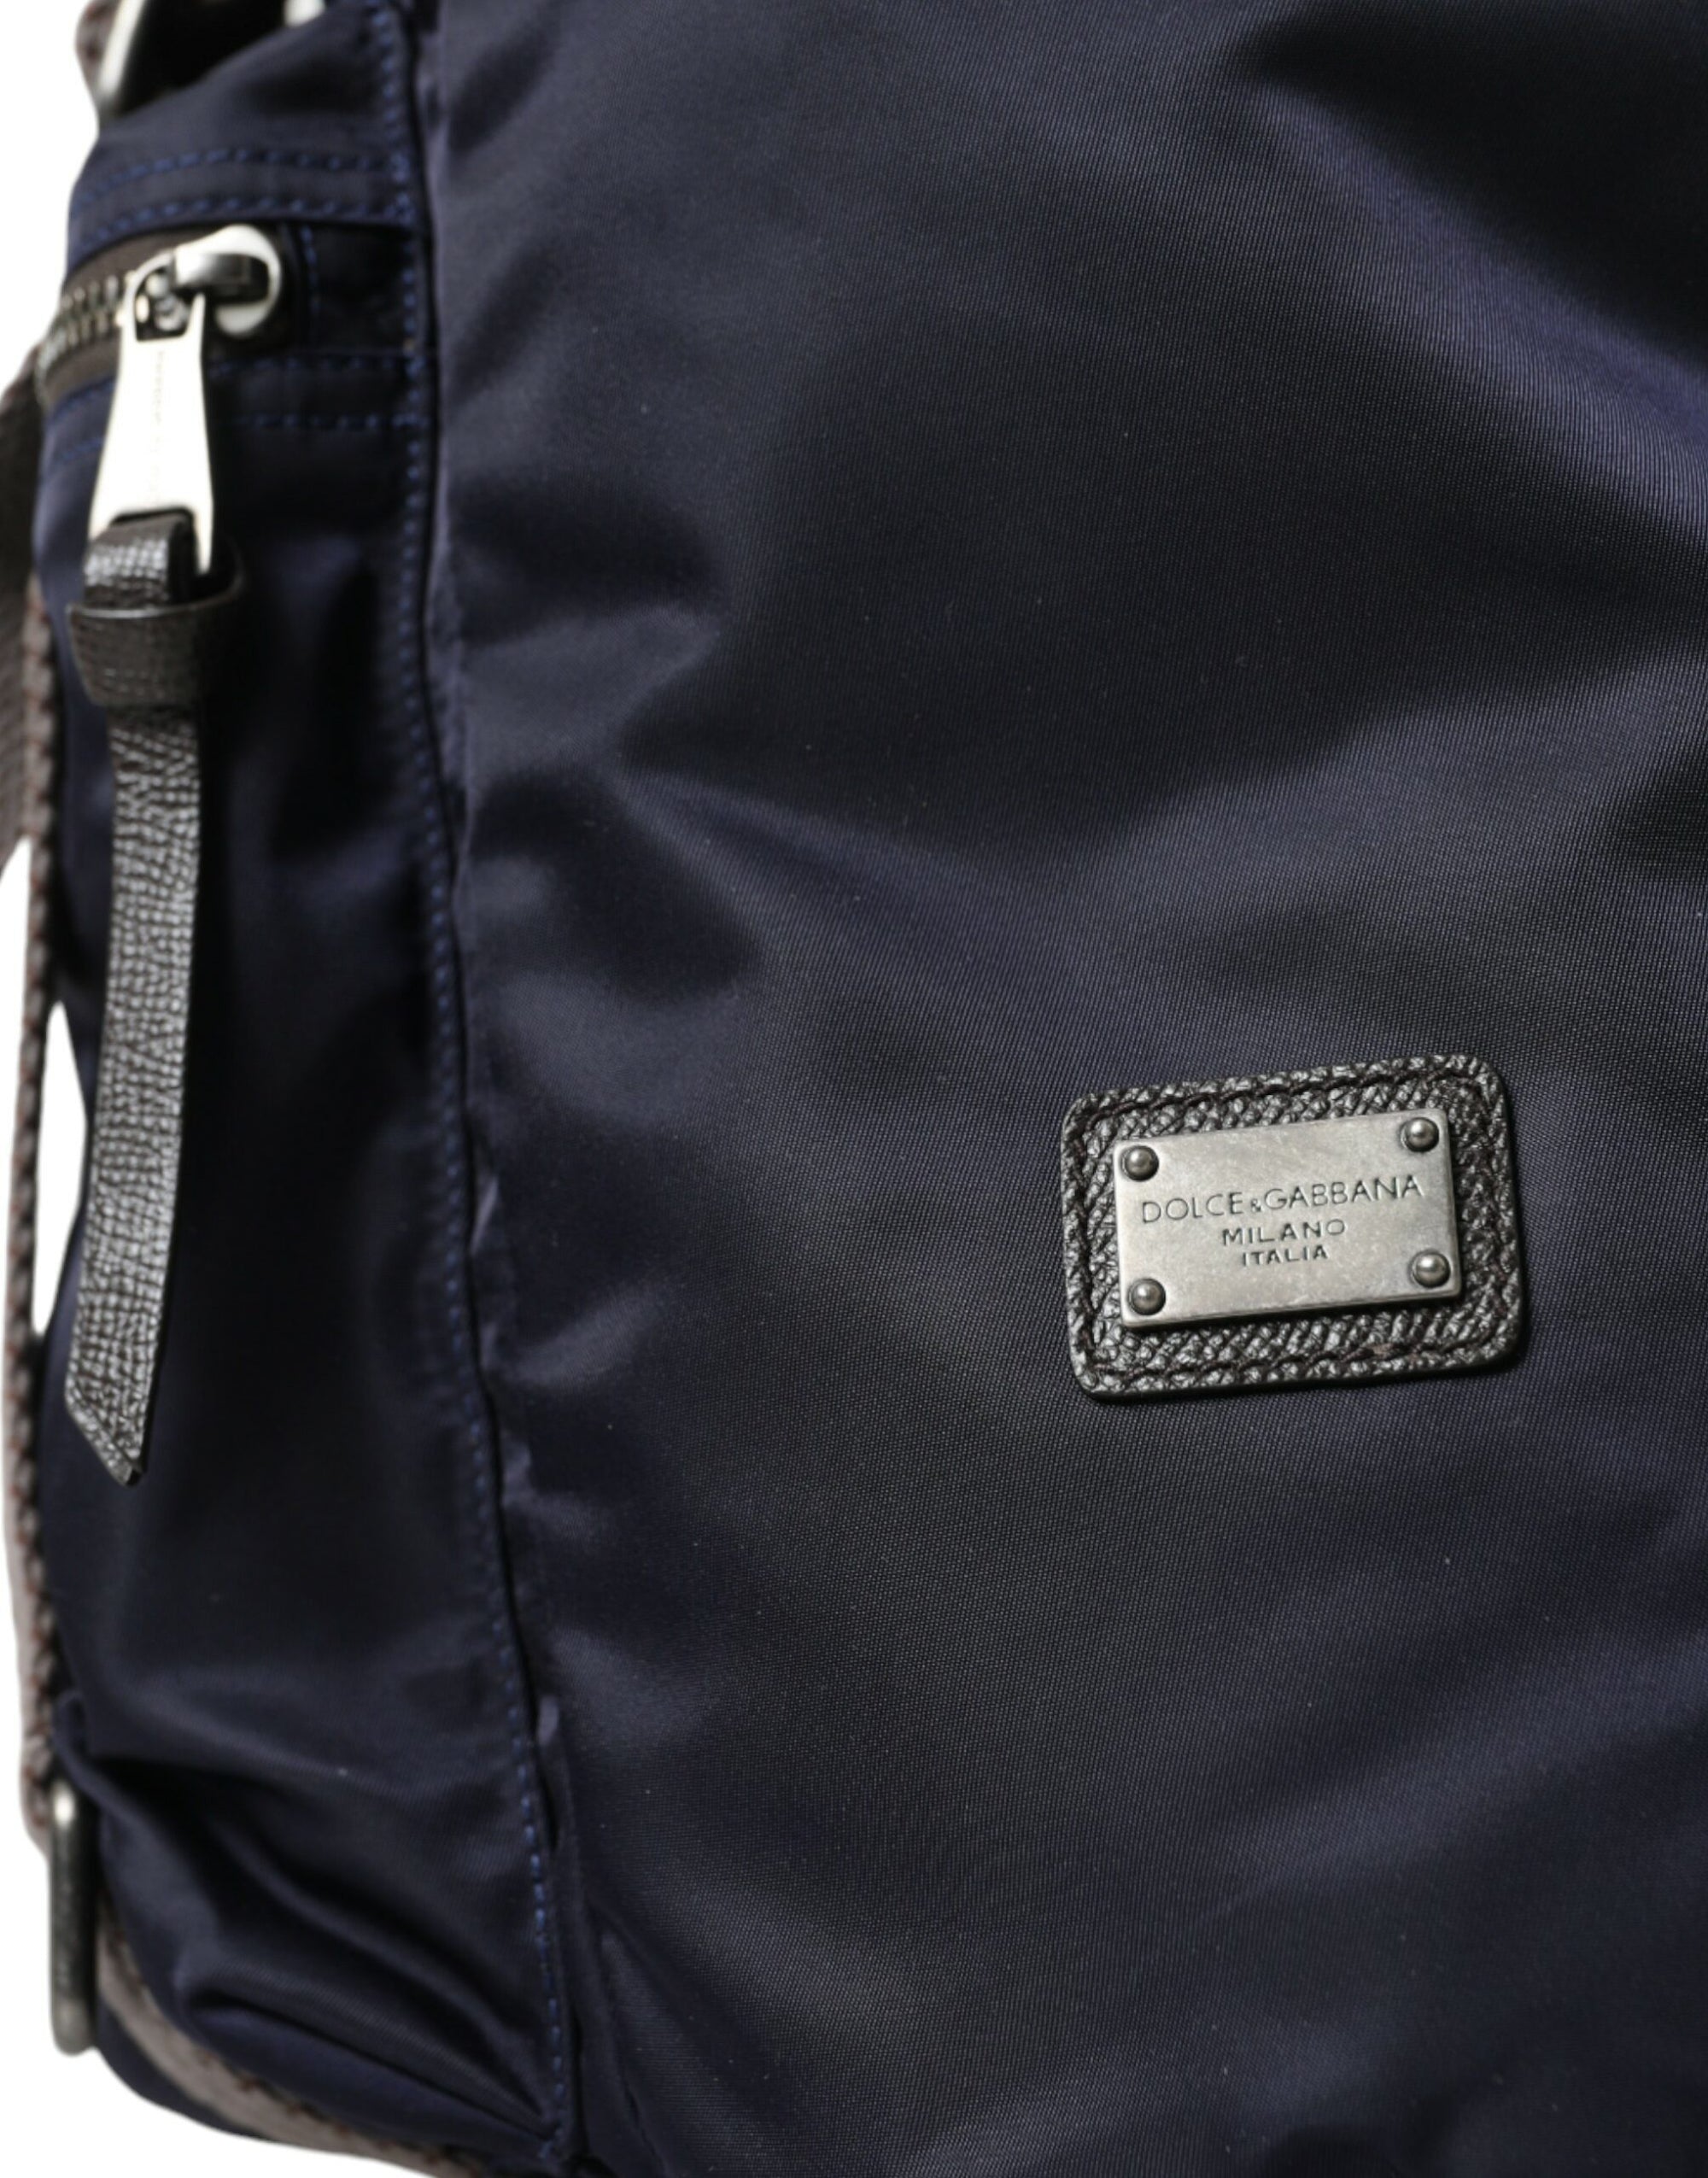 Elegant Blue Nylon Leather Backpack